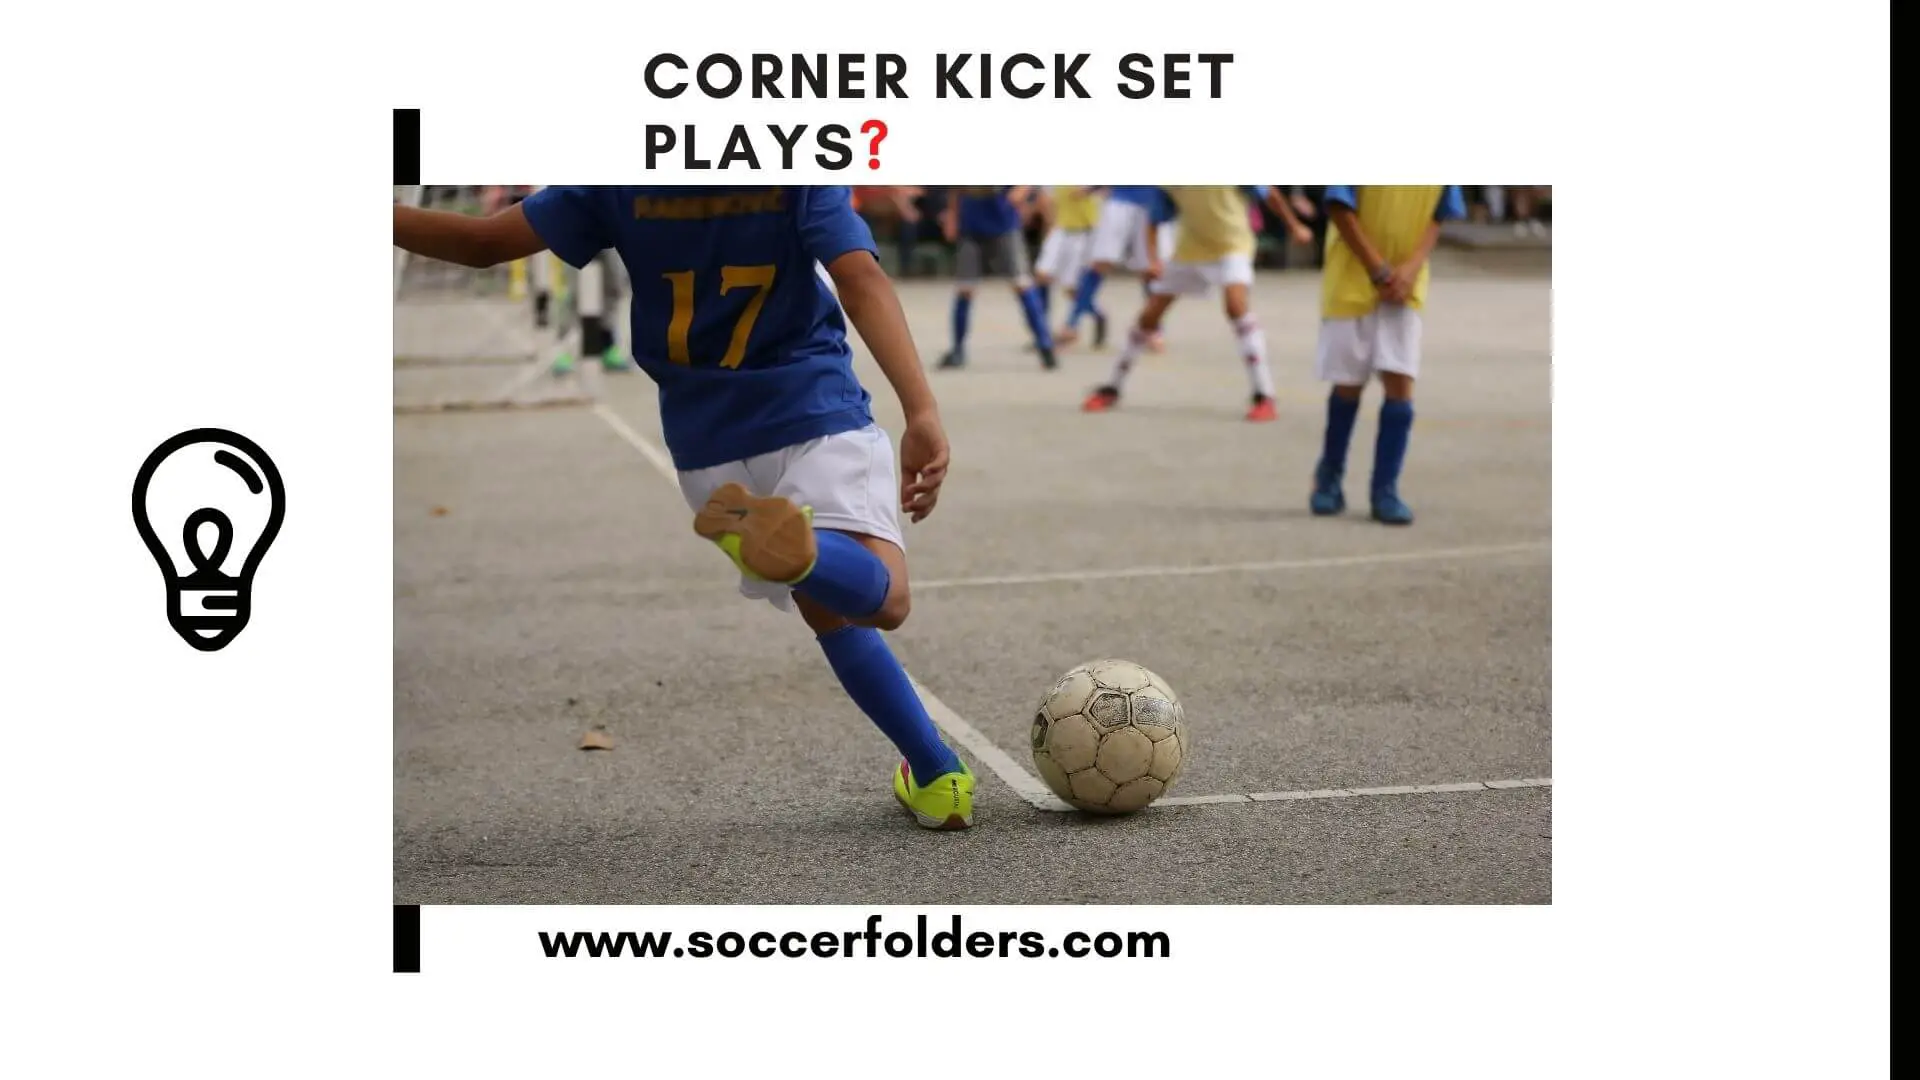 soccer corner kick set plays - Featured Image